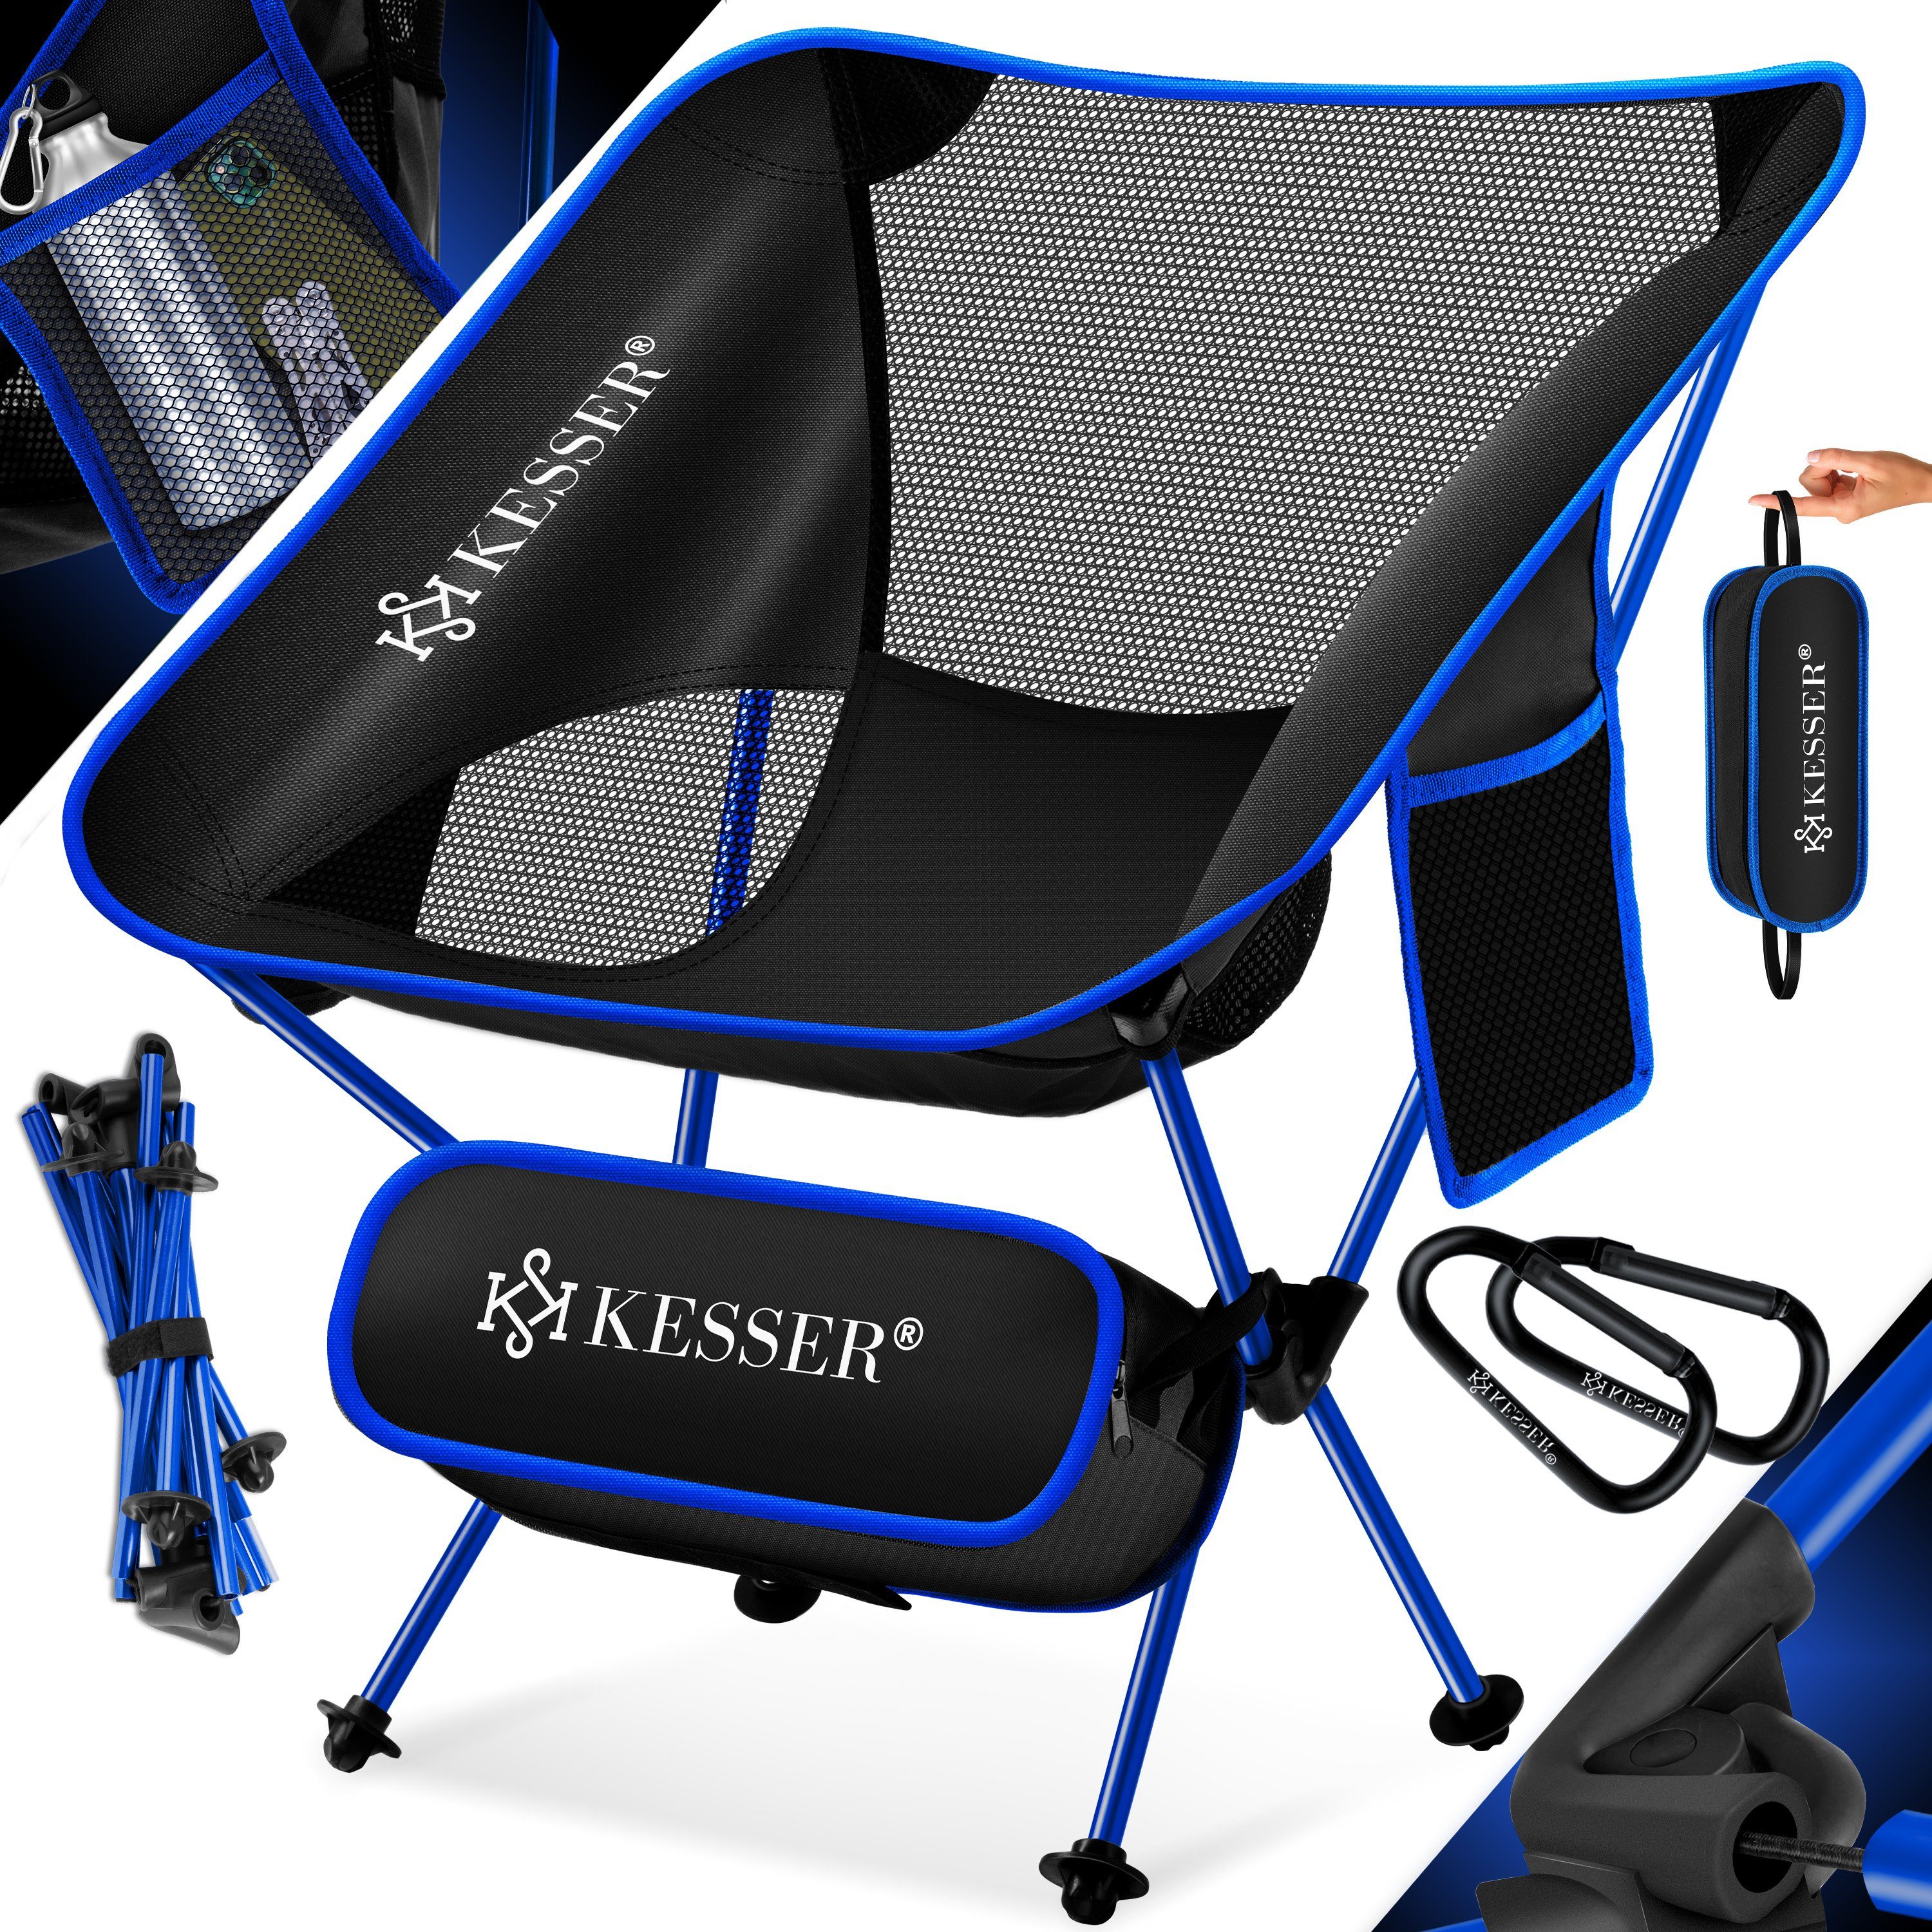 KESSER Campingstuhl, Campingstuhl faltbar klappbar tragbar Angel Camping Stuhl blau